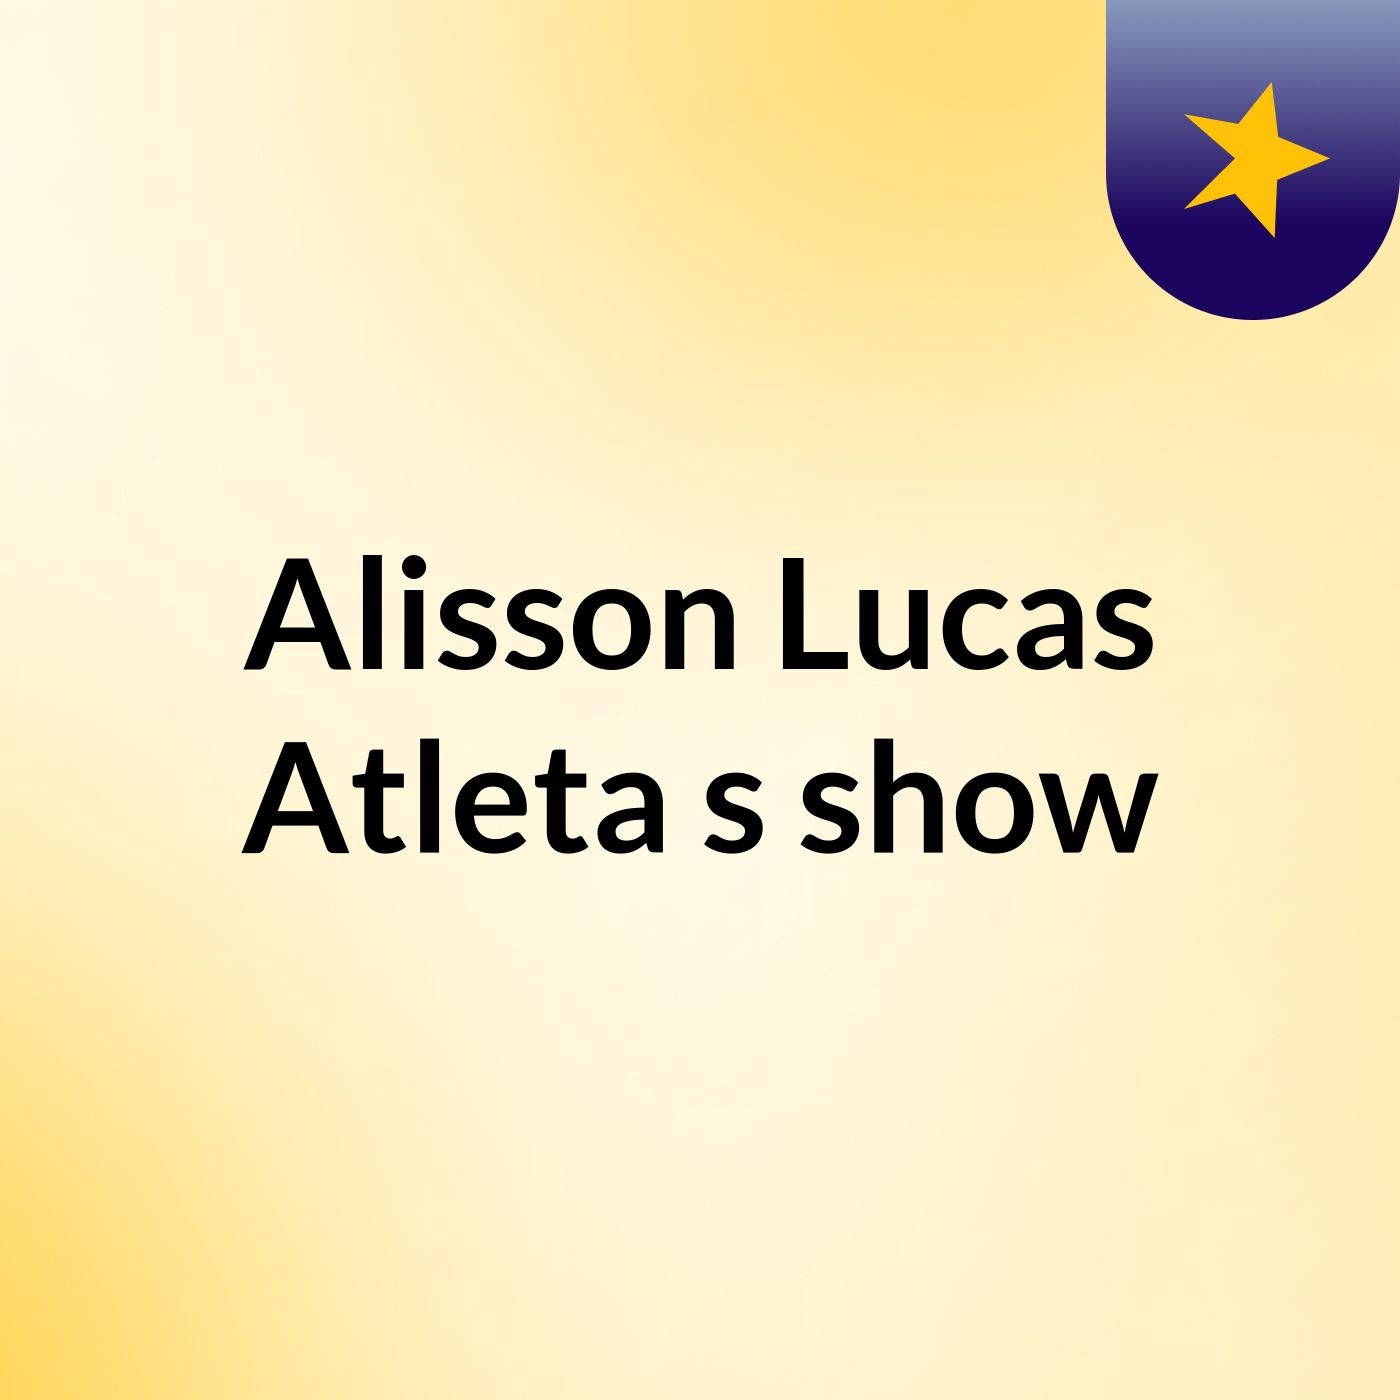 Alisson Lucas Atleta's show